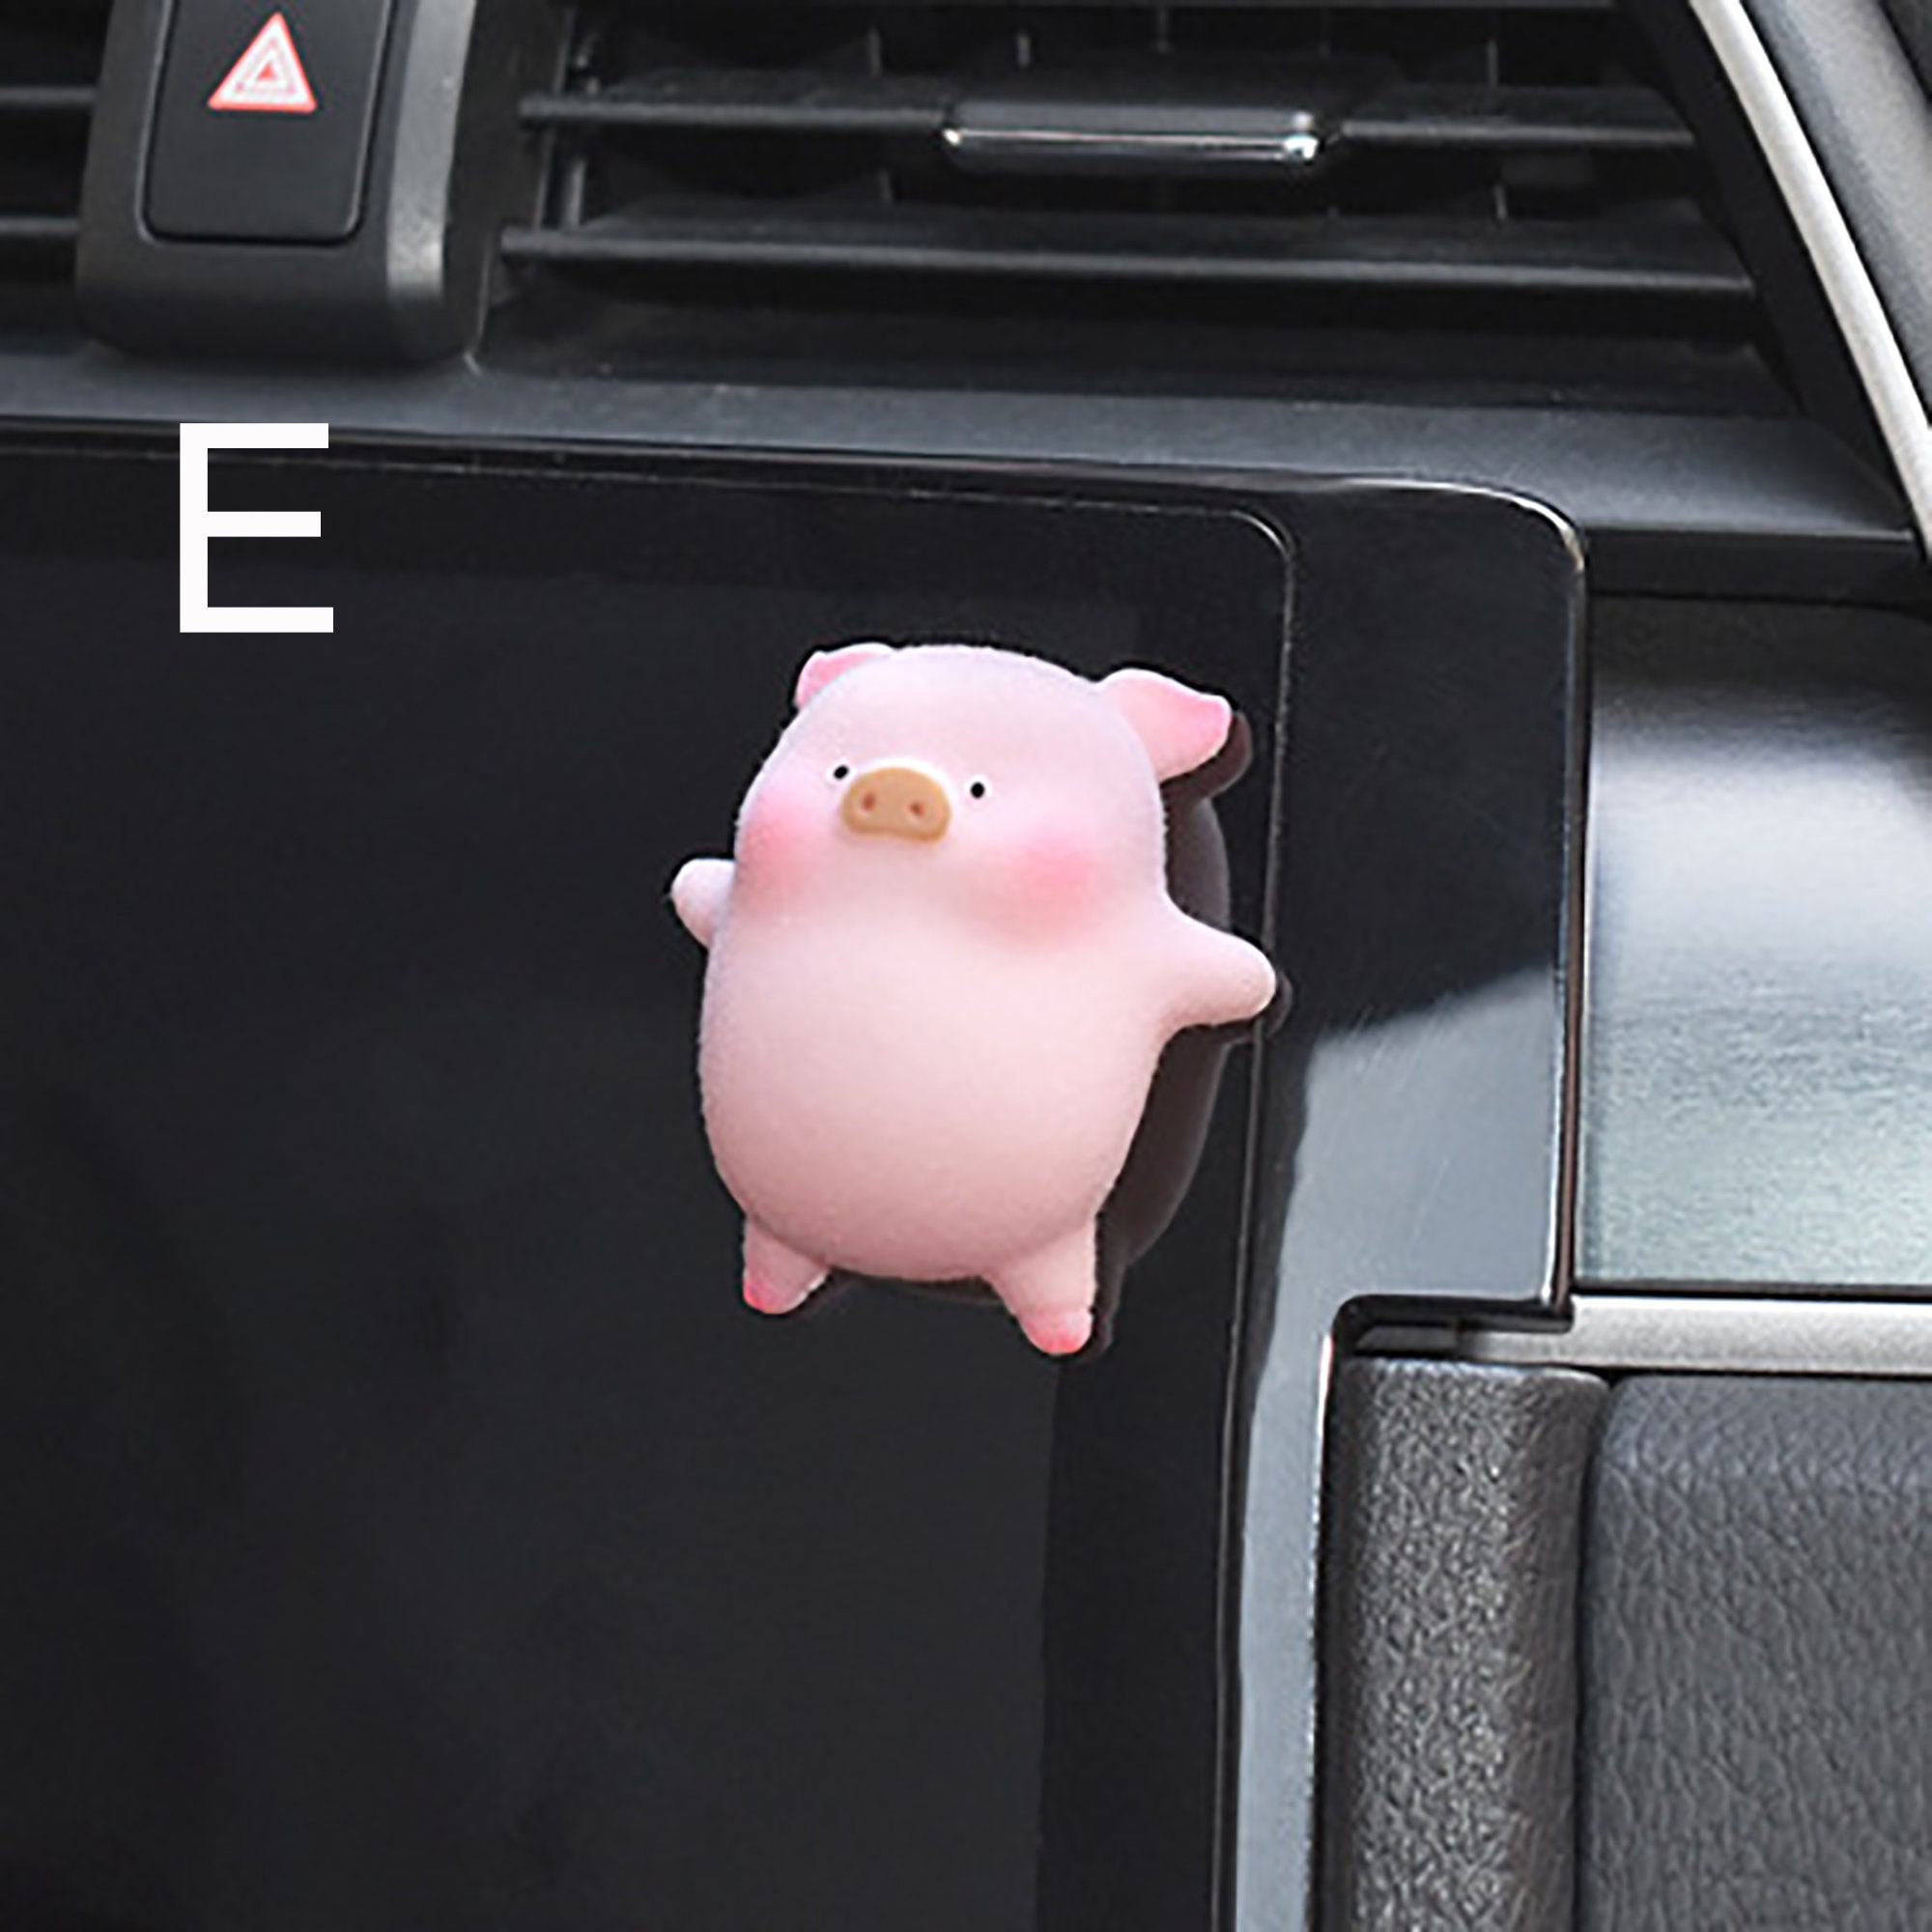 6 Mini Resin Pig Cartoon Ornaments Cute Car Dashboard Toys, My